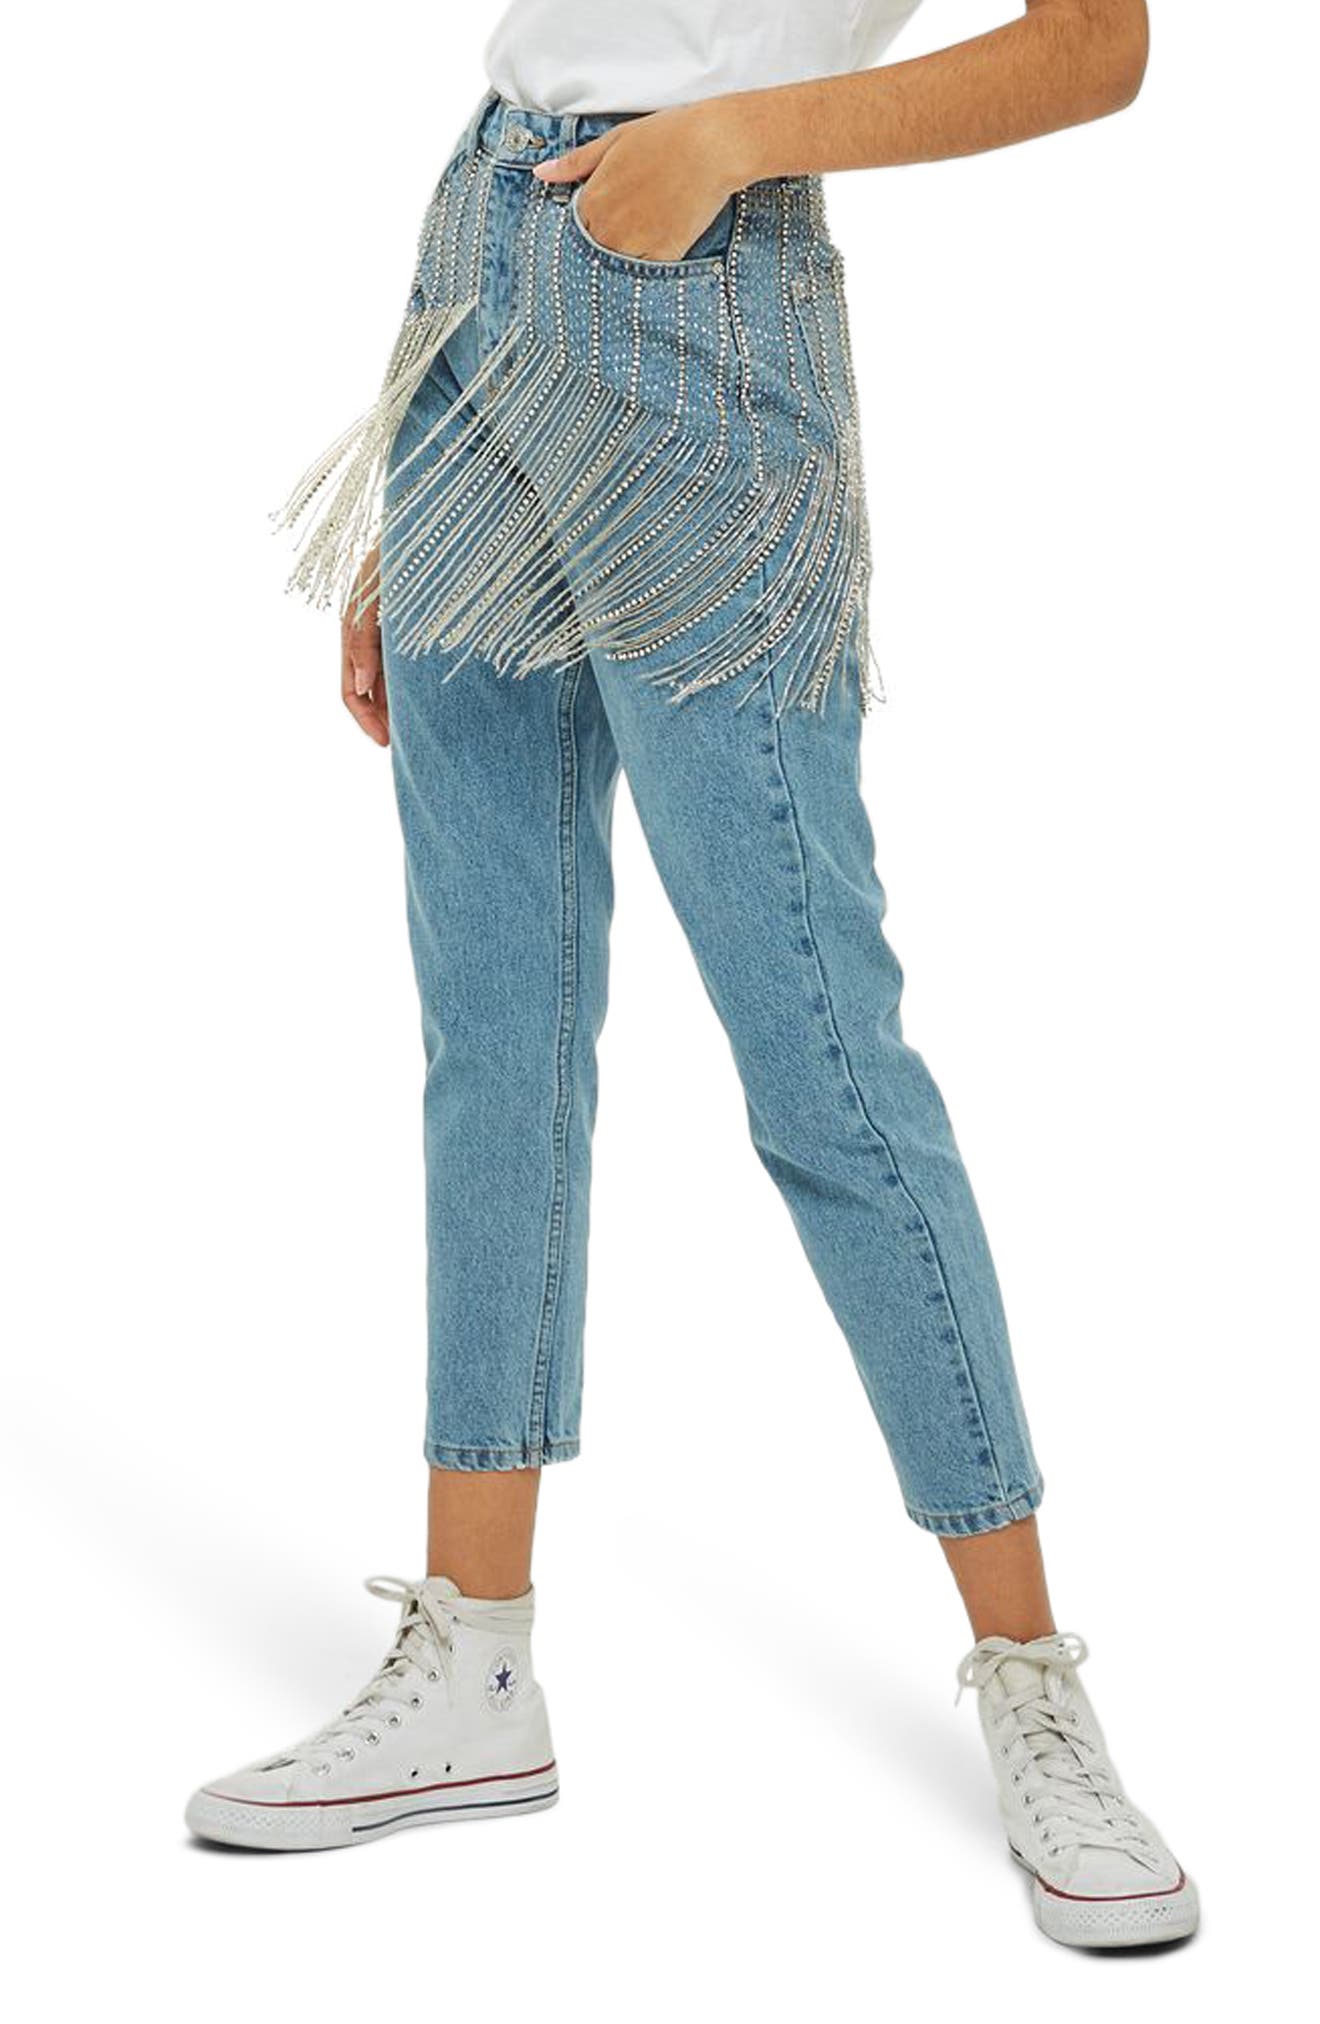 topshop bedazzled jeans